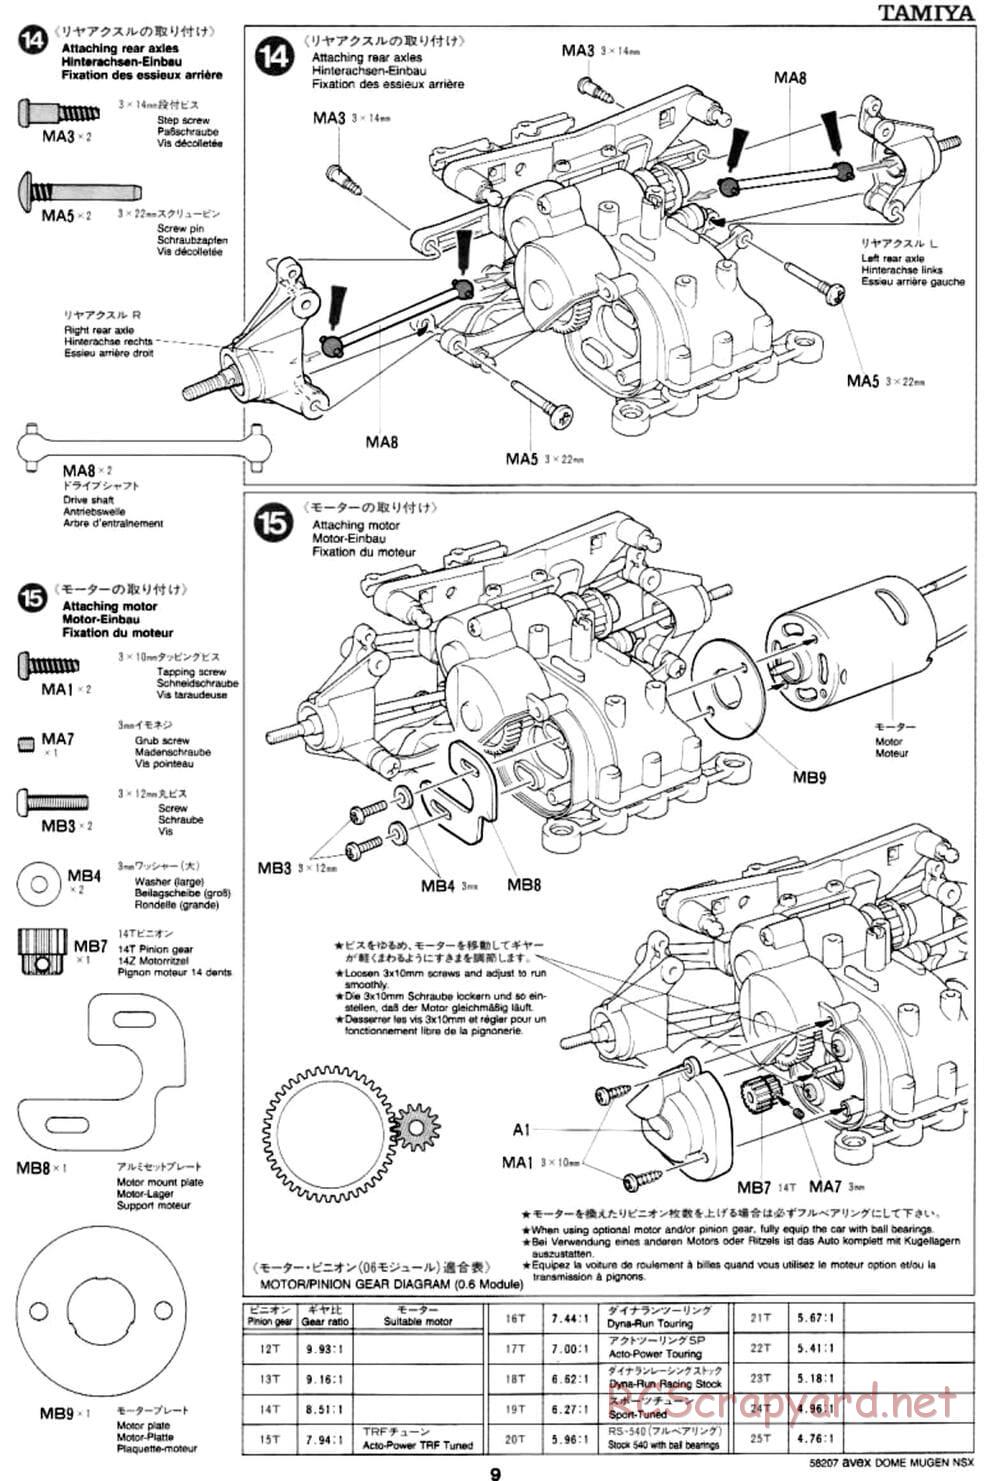 Tamiya - Avex Dome Mugen NSX - TA-03R Chassis - Manual - Page 9